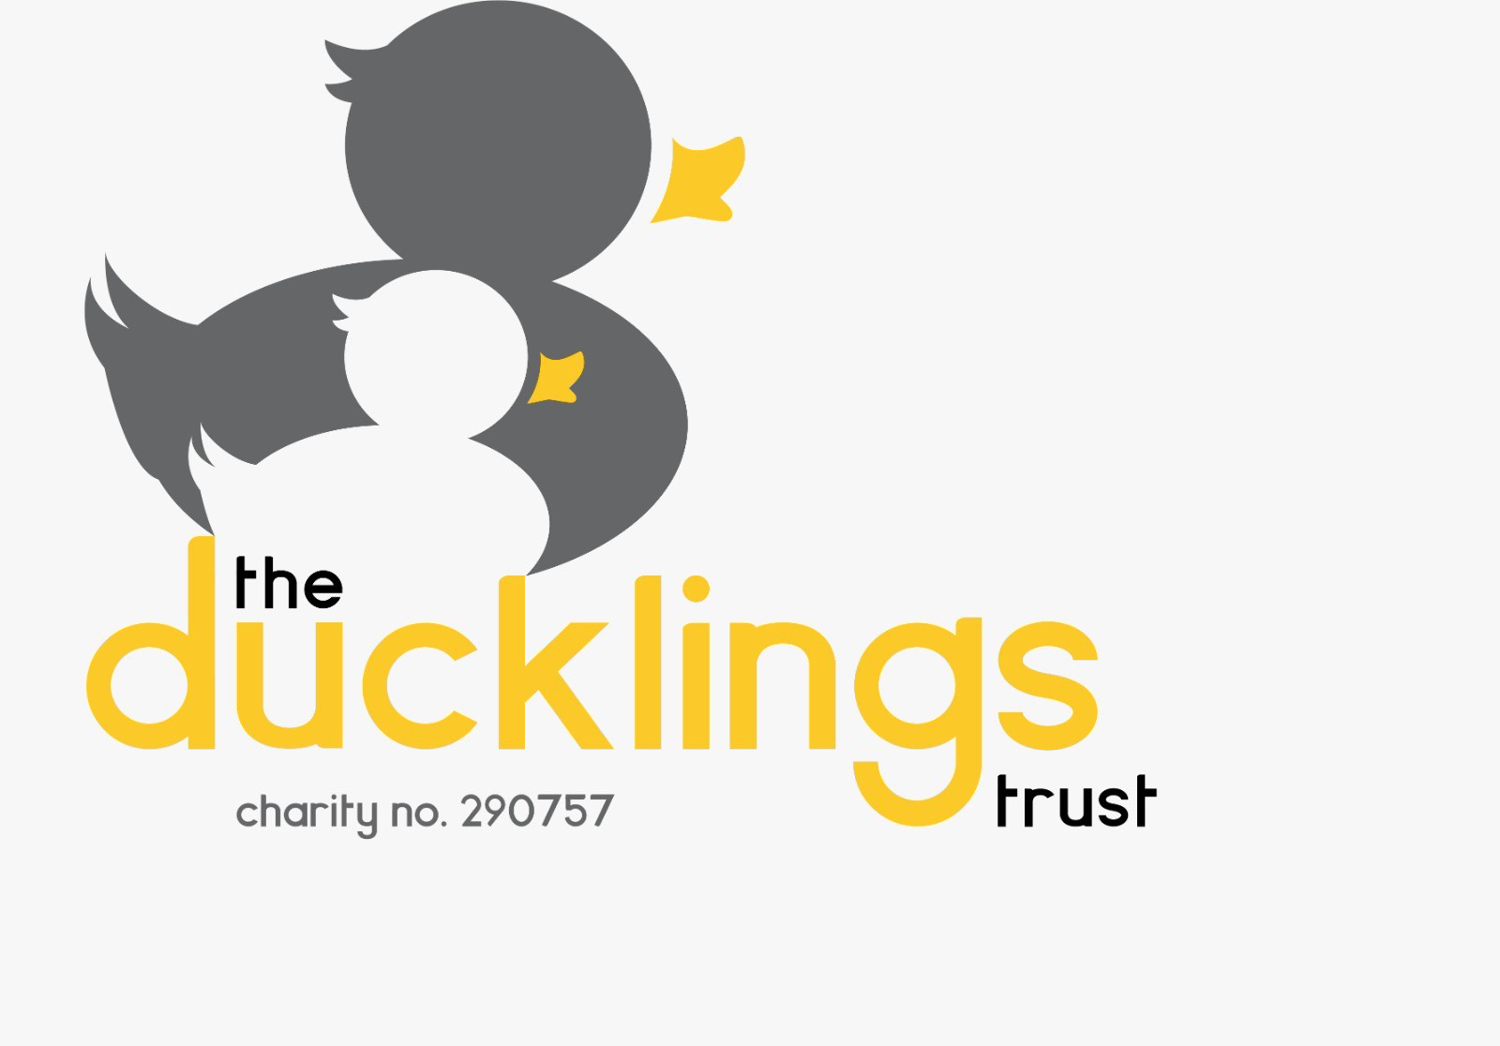 The Ducklings Trust logo